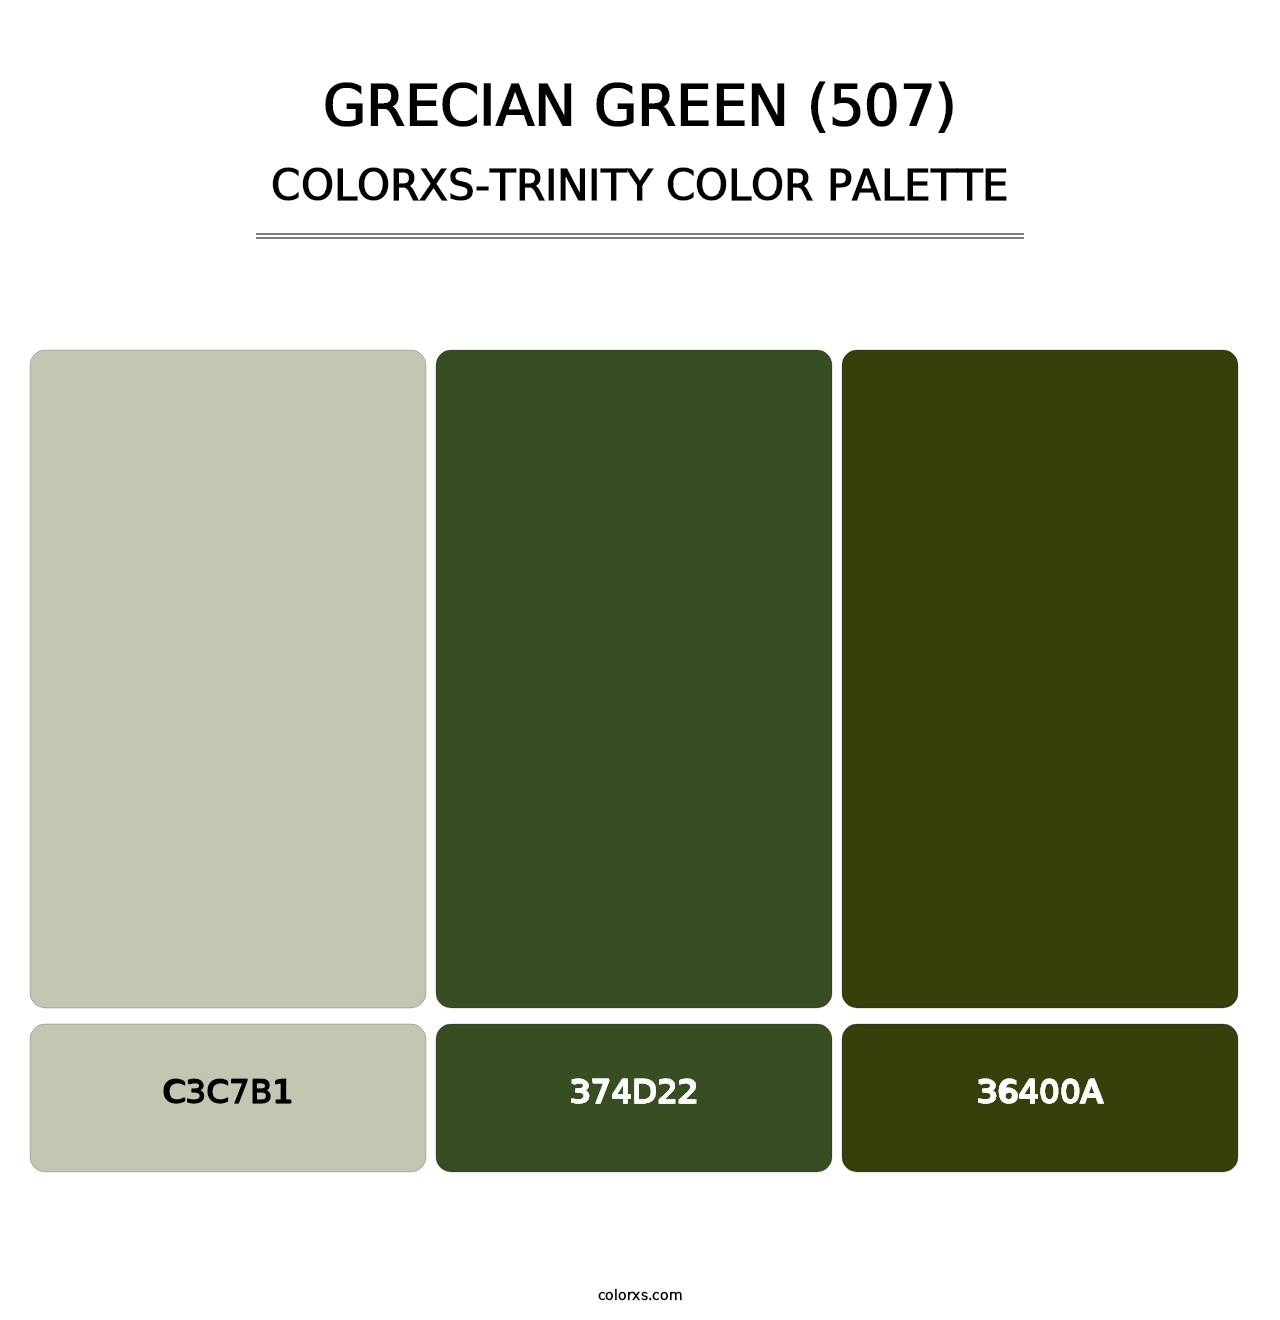 Grecian Green (507) - Colorxs Trinity Palette